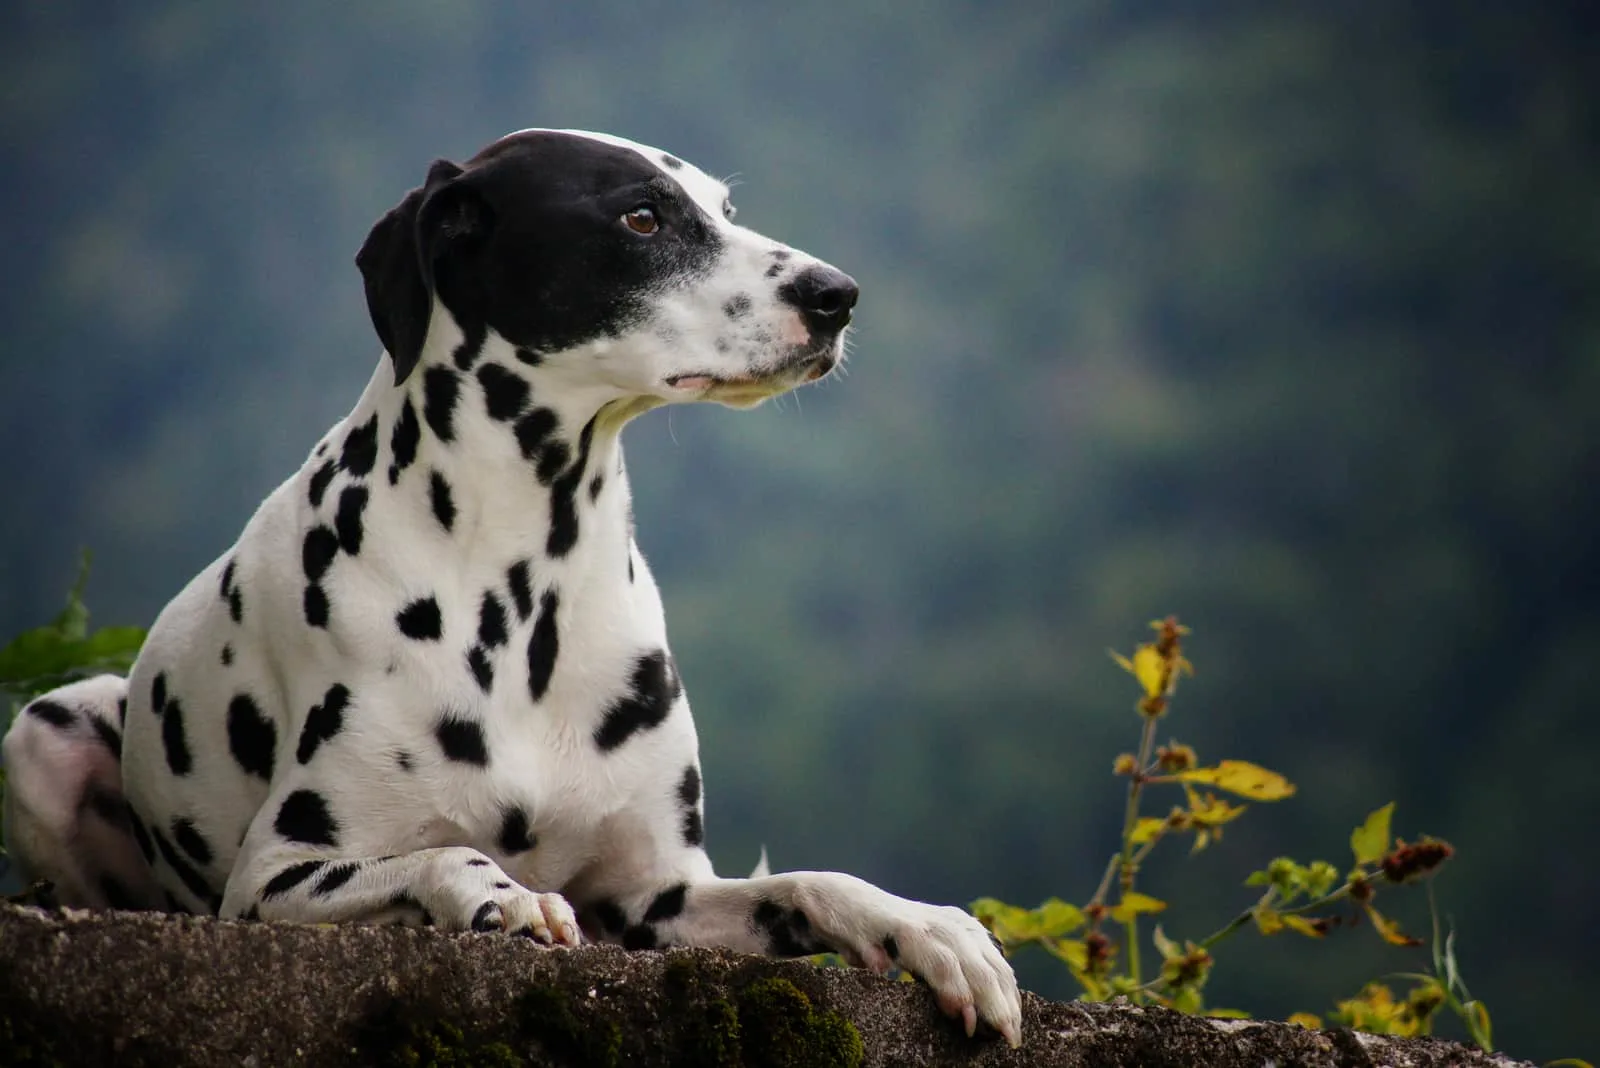 dalmatian dog lying outdoors in nature